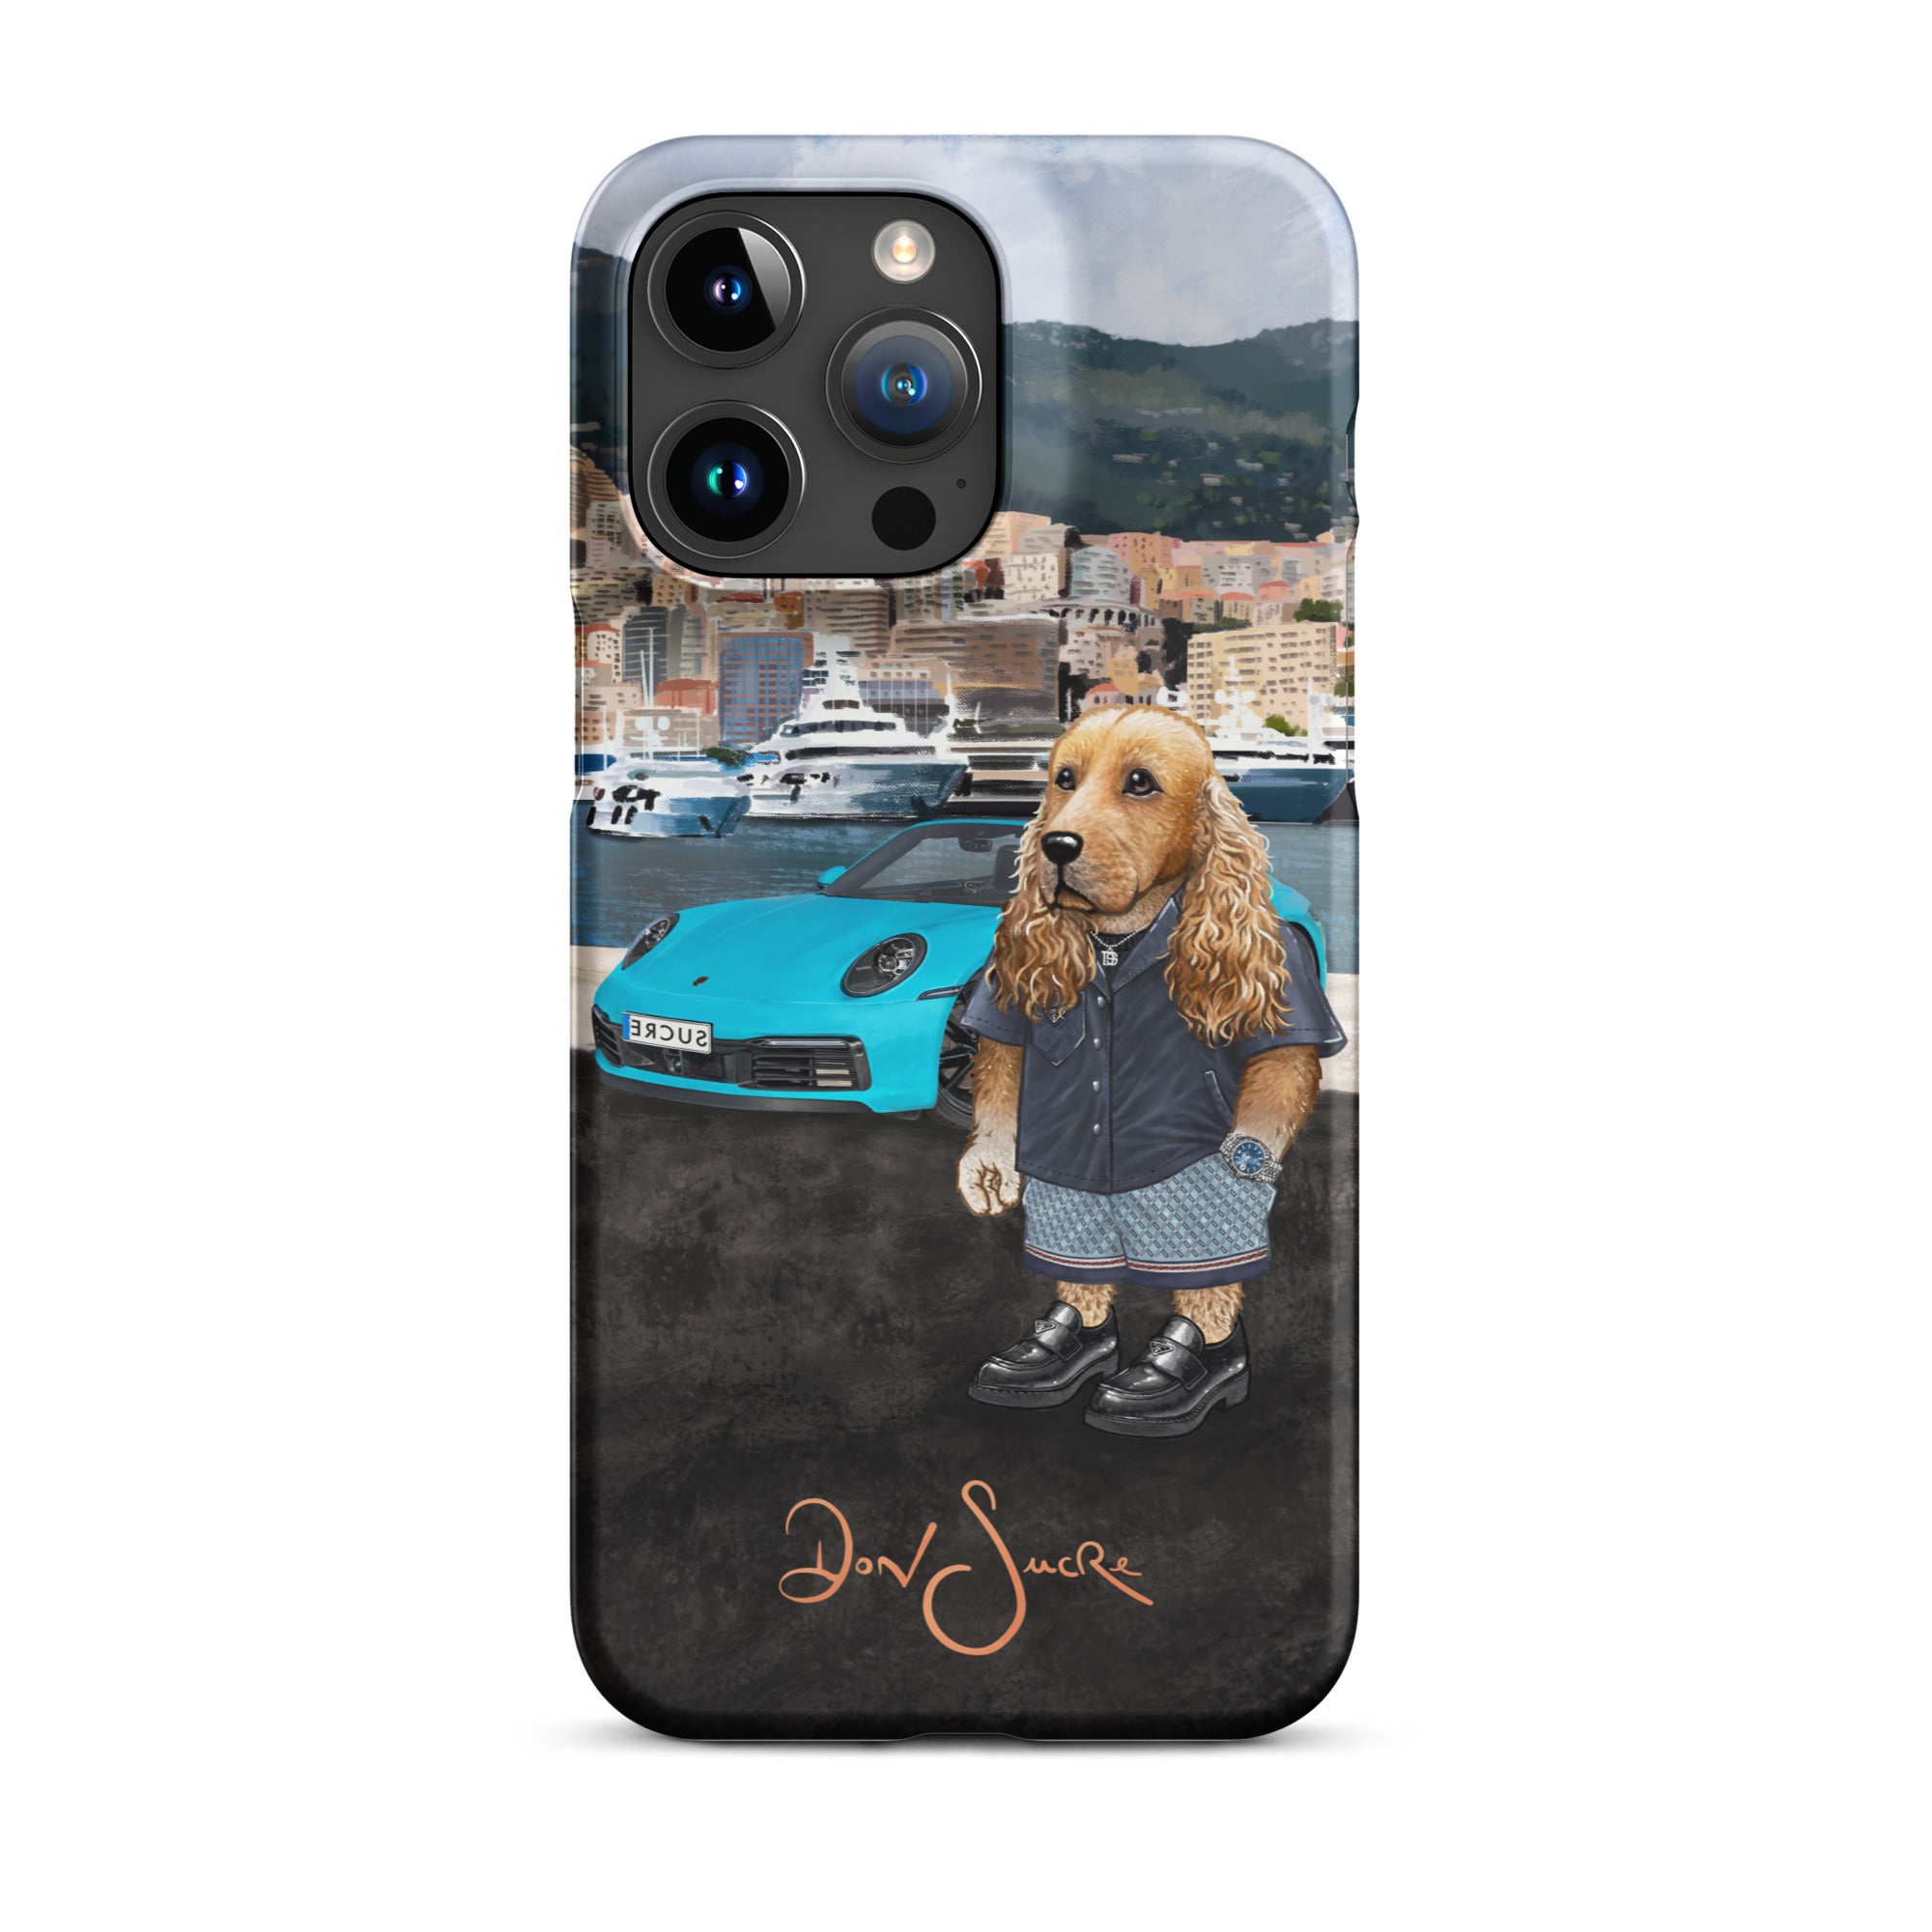 "Monte-Carlo" iPhone Case